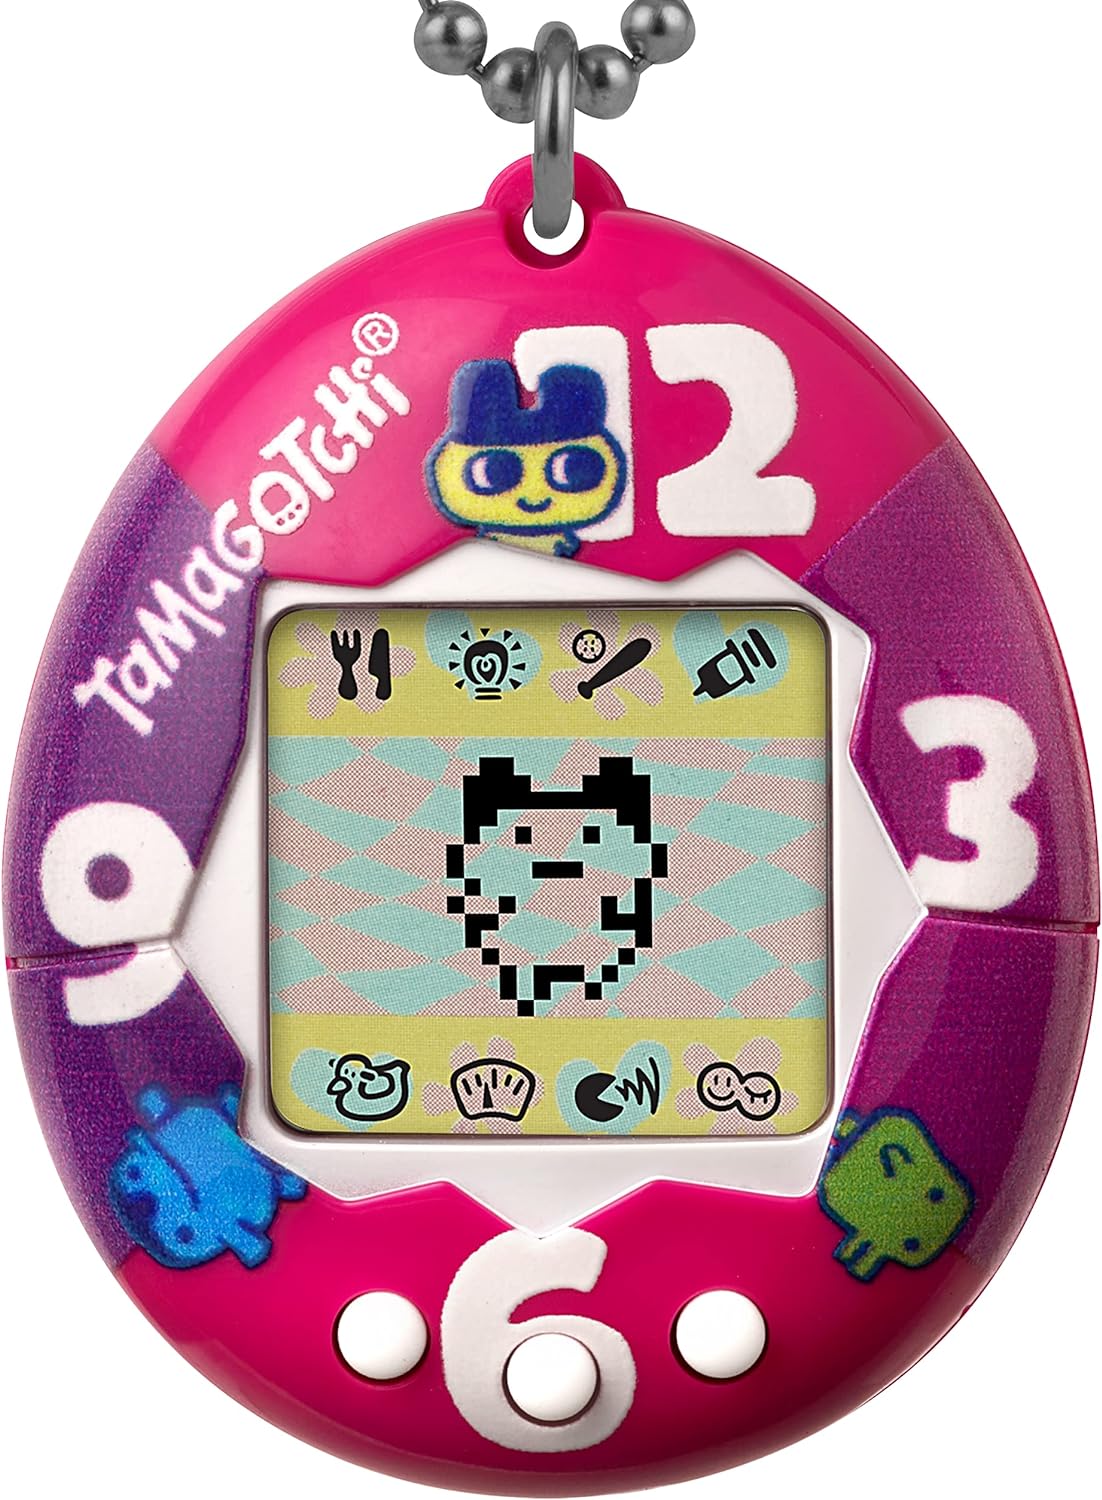 Tamagotchi オリジナル - 時計 ピンク パープル ホワイト